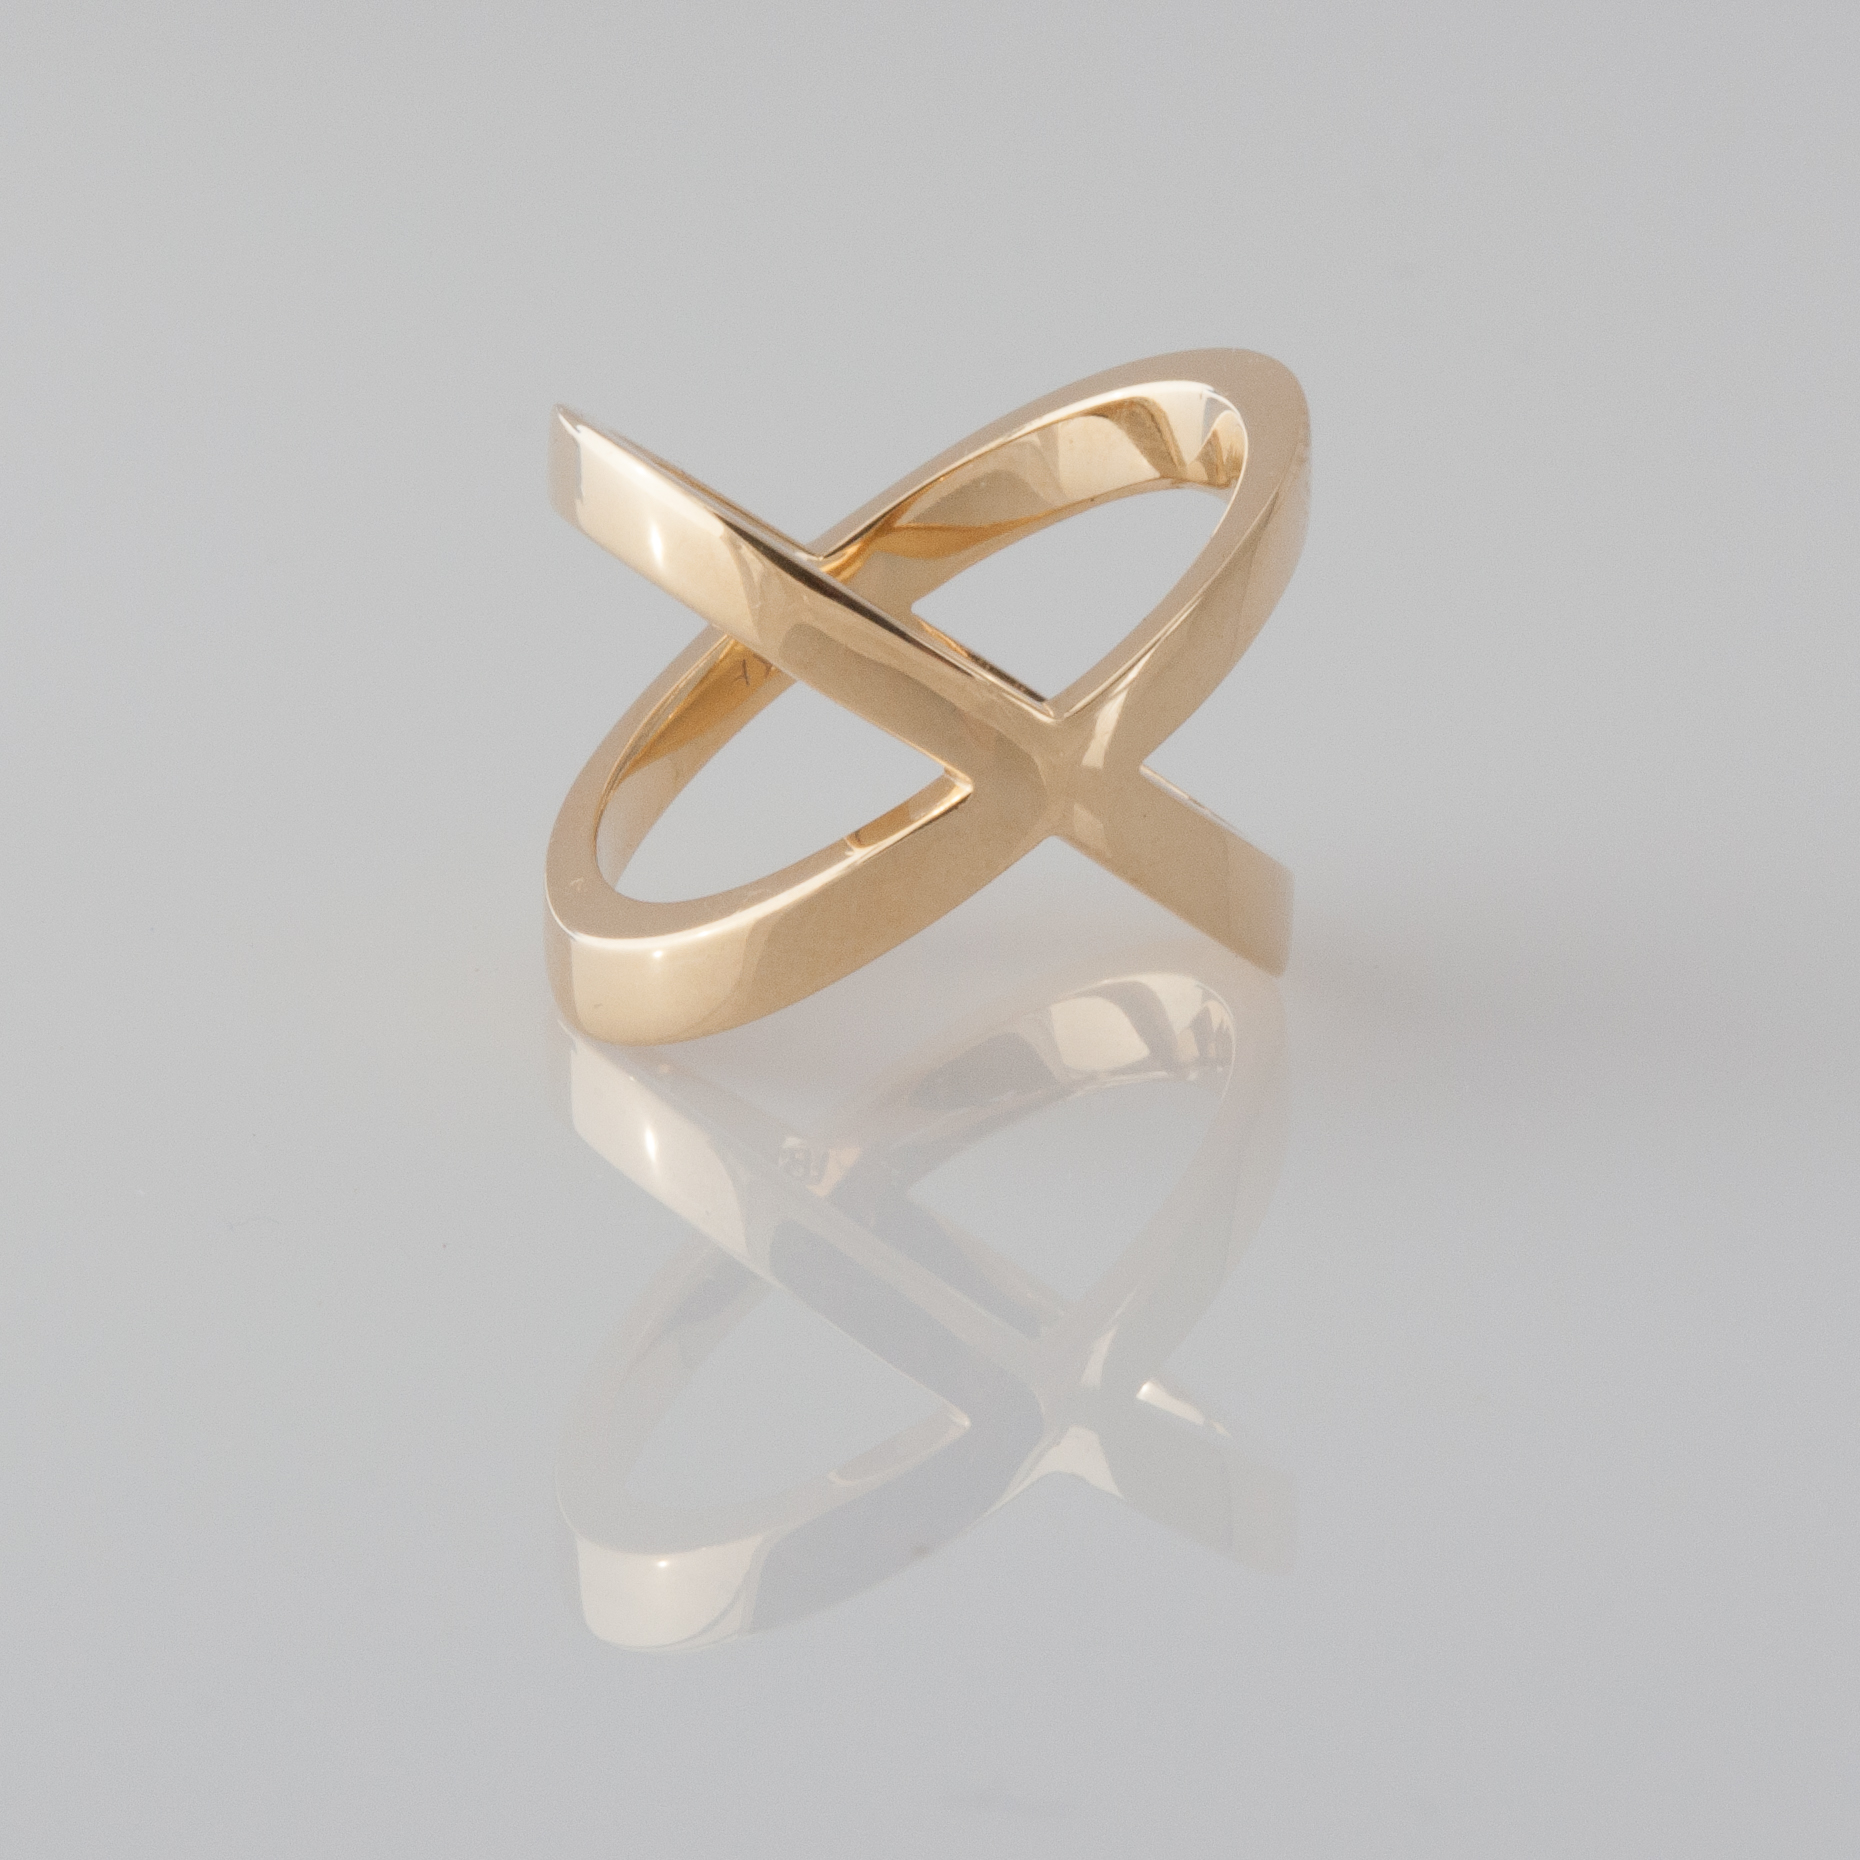 Contemporary Rings at Gladstone Fine Jewelry — Gladstone Jewelry